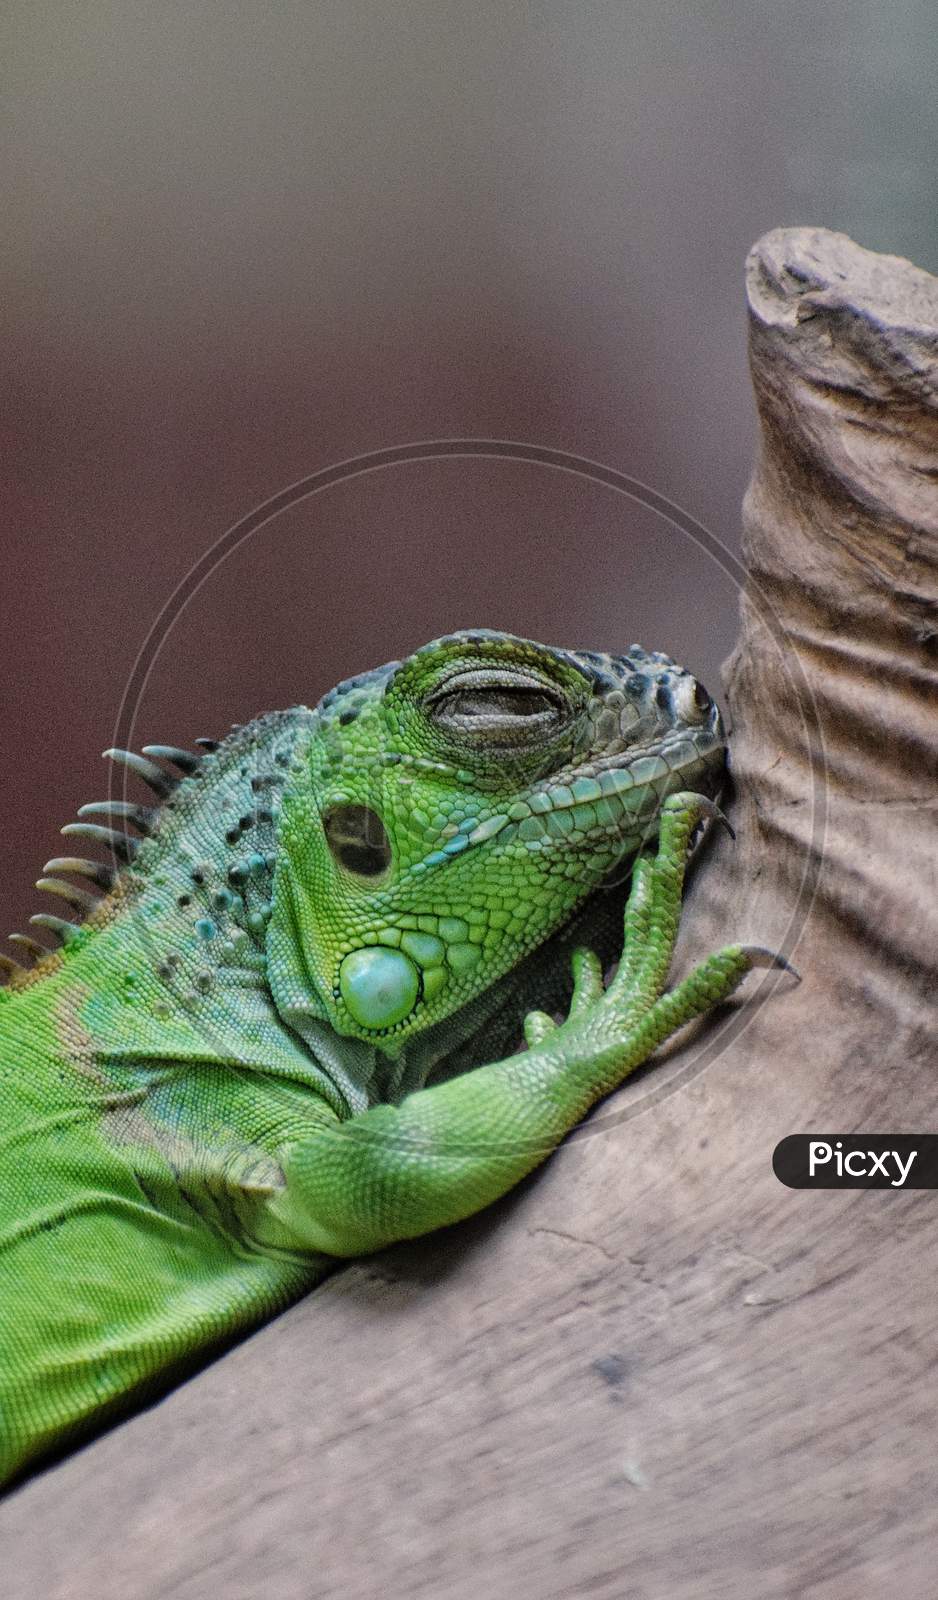 Green Iguana sleeping on a stem